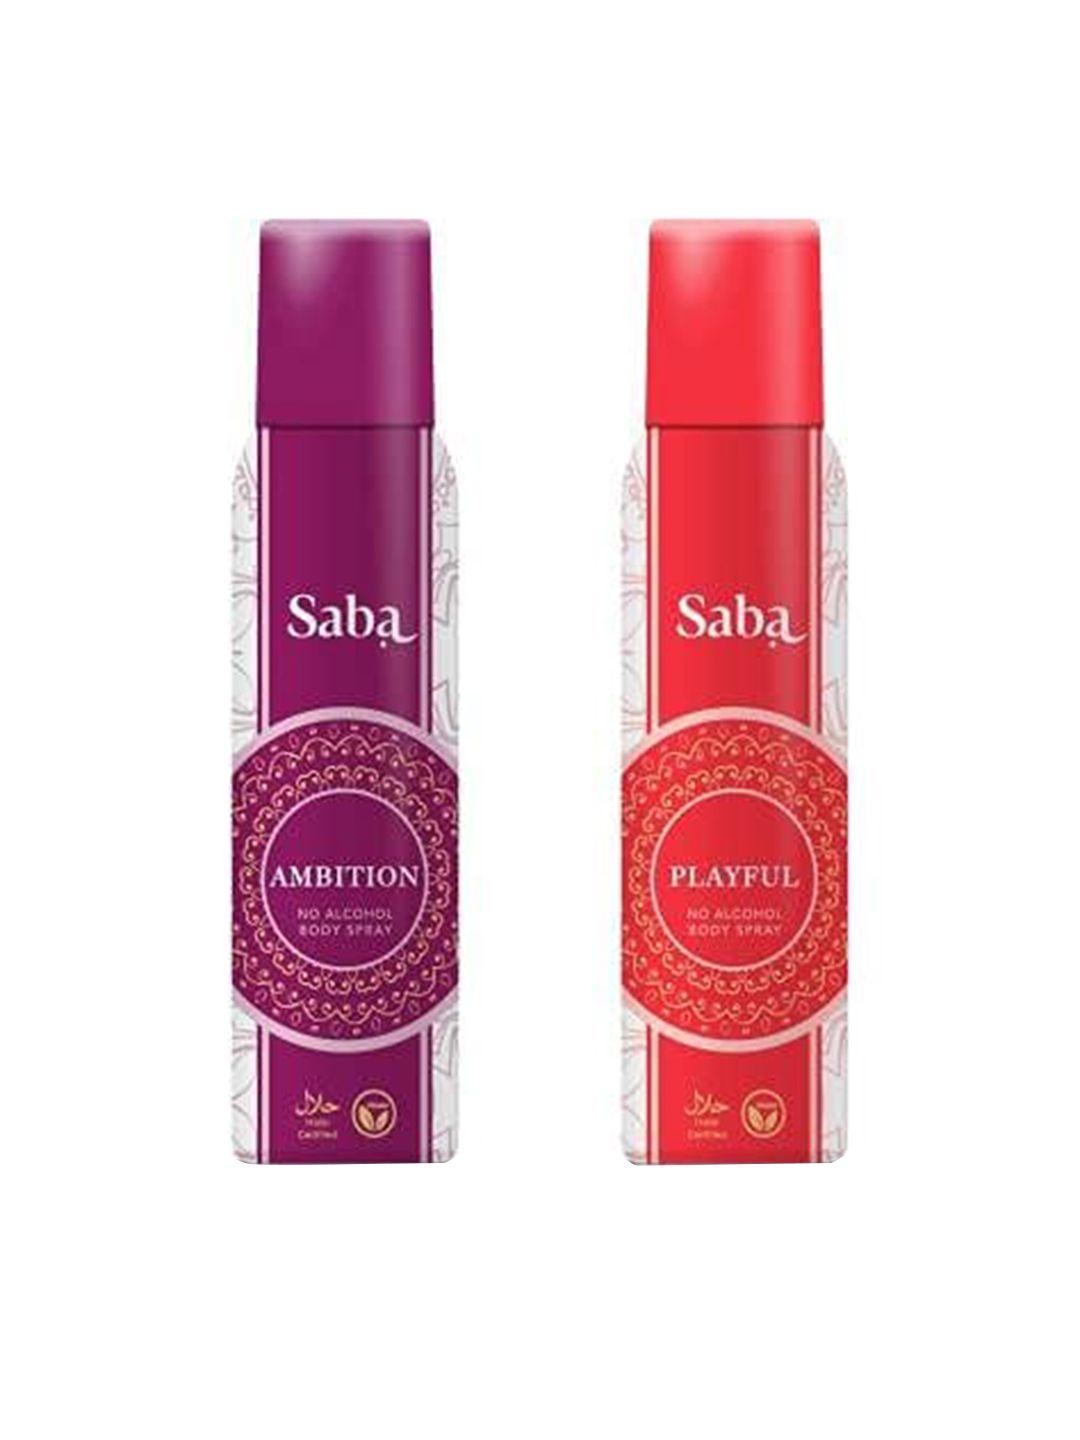 saba women set of 2 vegan deodorant body spray - ambition + playful - 150 ml each